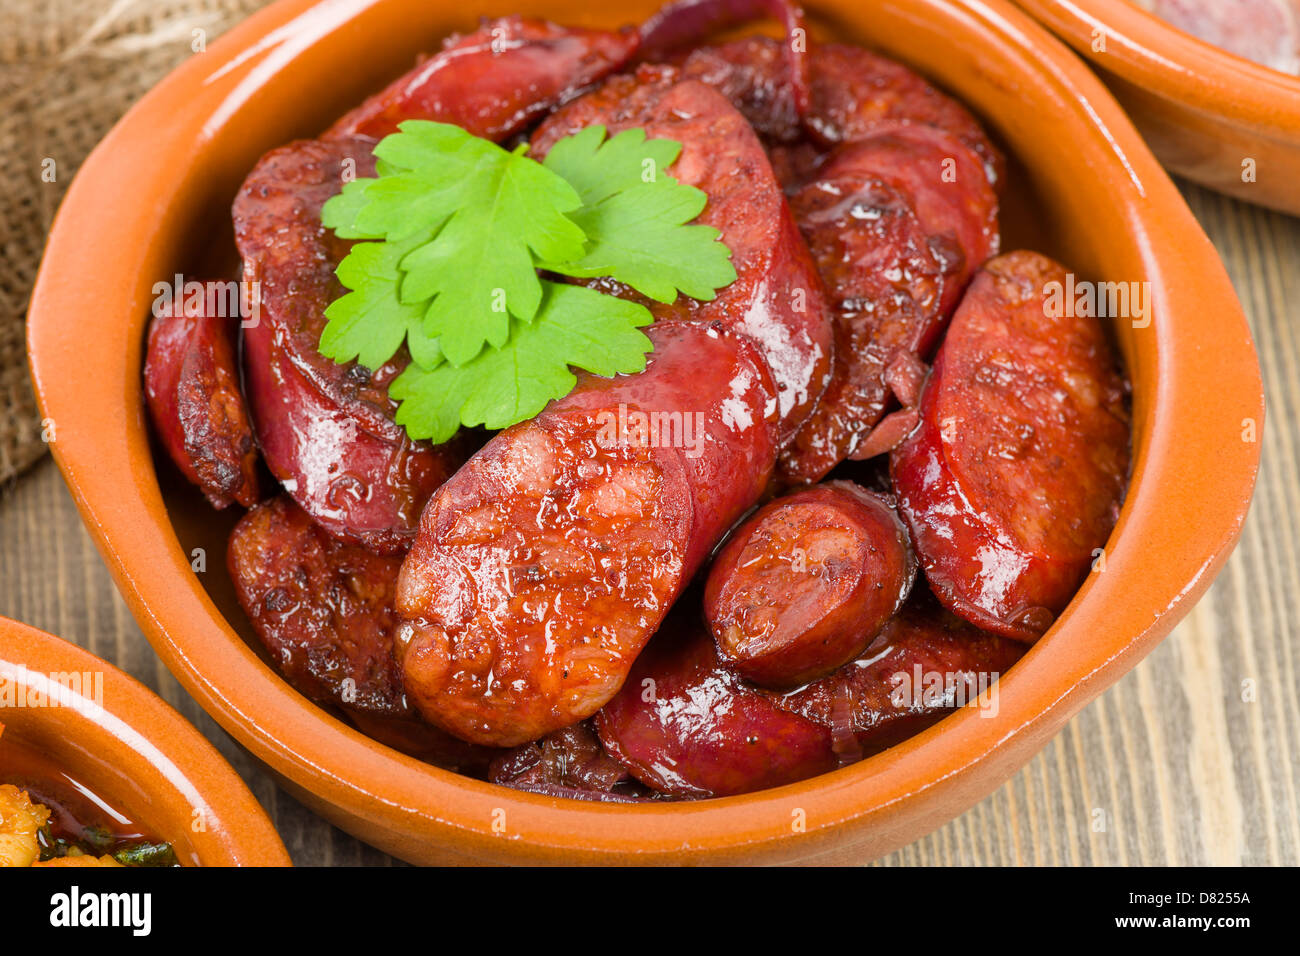 Chorizo al Vino (Spicy sausage cooked in red wine). Traditional Spanish tapas dish. Stock Photo